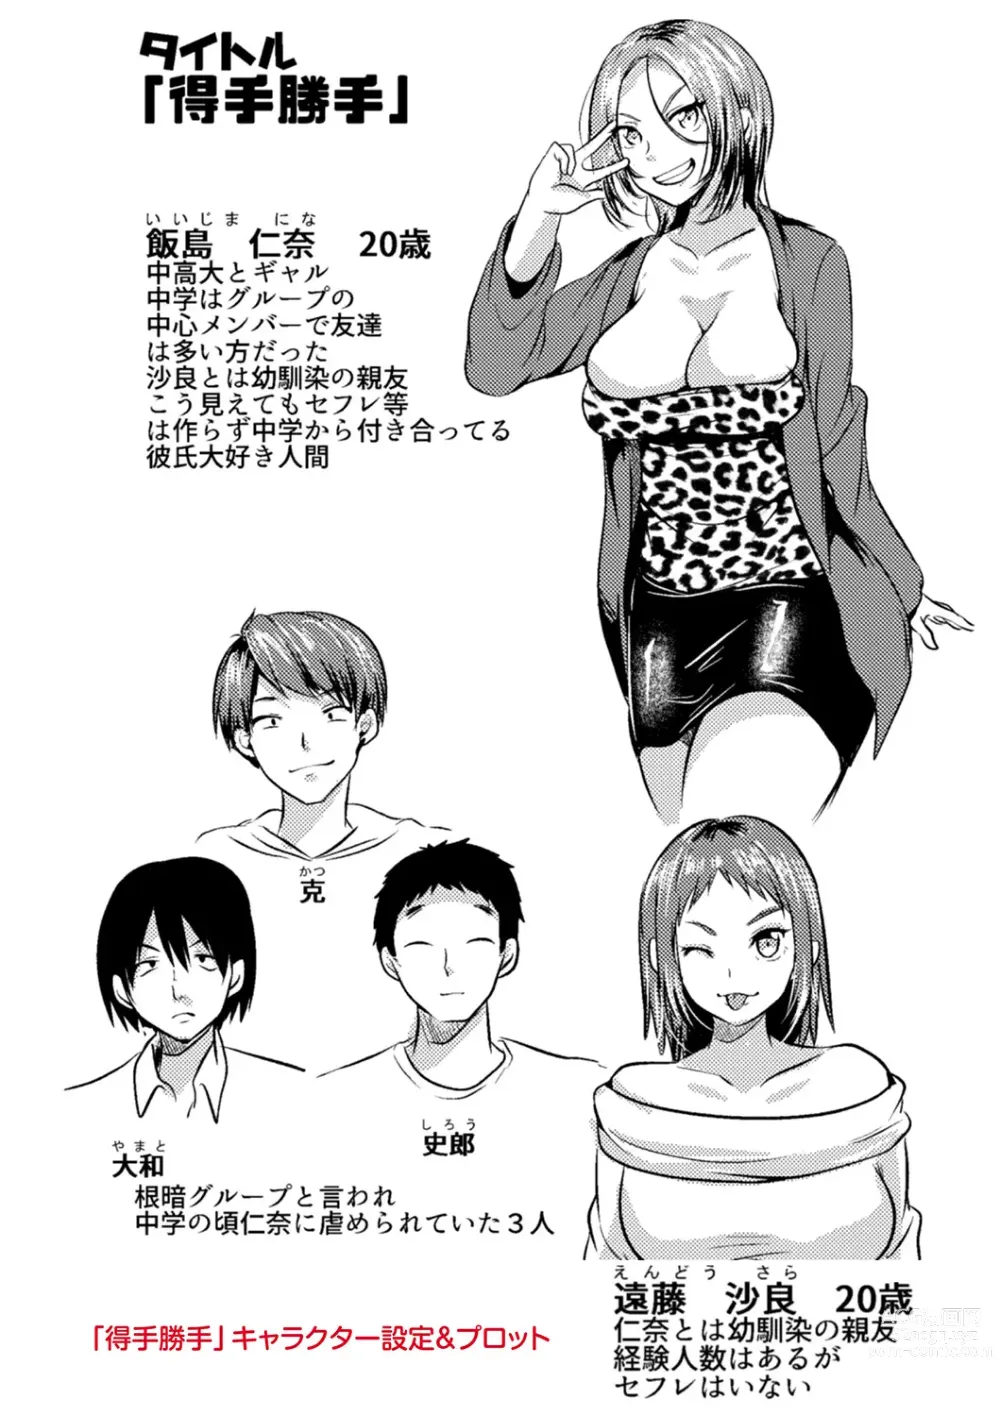 Page 212 of manga Kowashite Asobo + DLsite Gentei Chara Settei & Plot